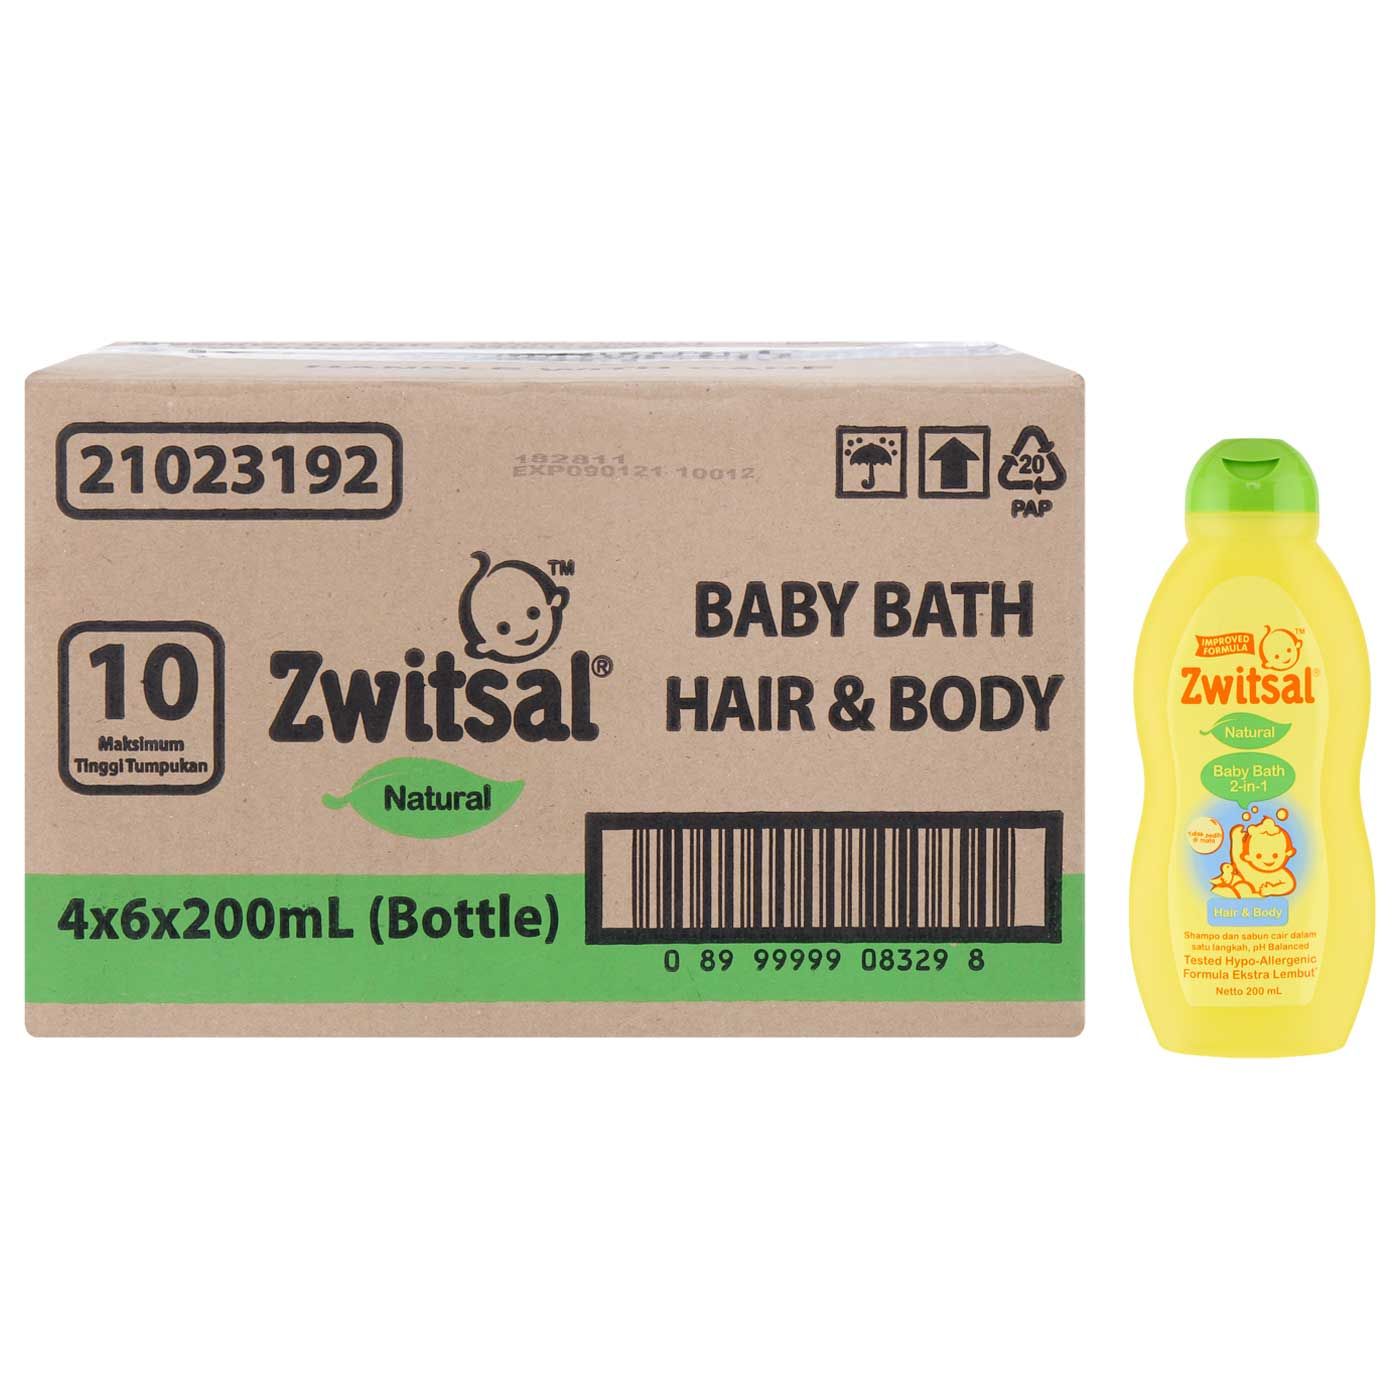 Zwitsal Natural Baby Bath 2in1 Hair & Body 200ml Tub - 3